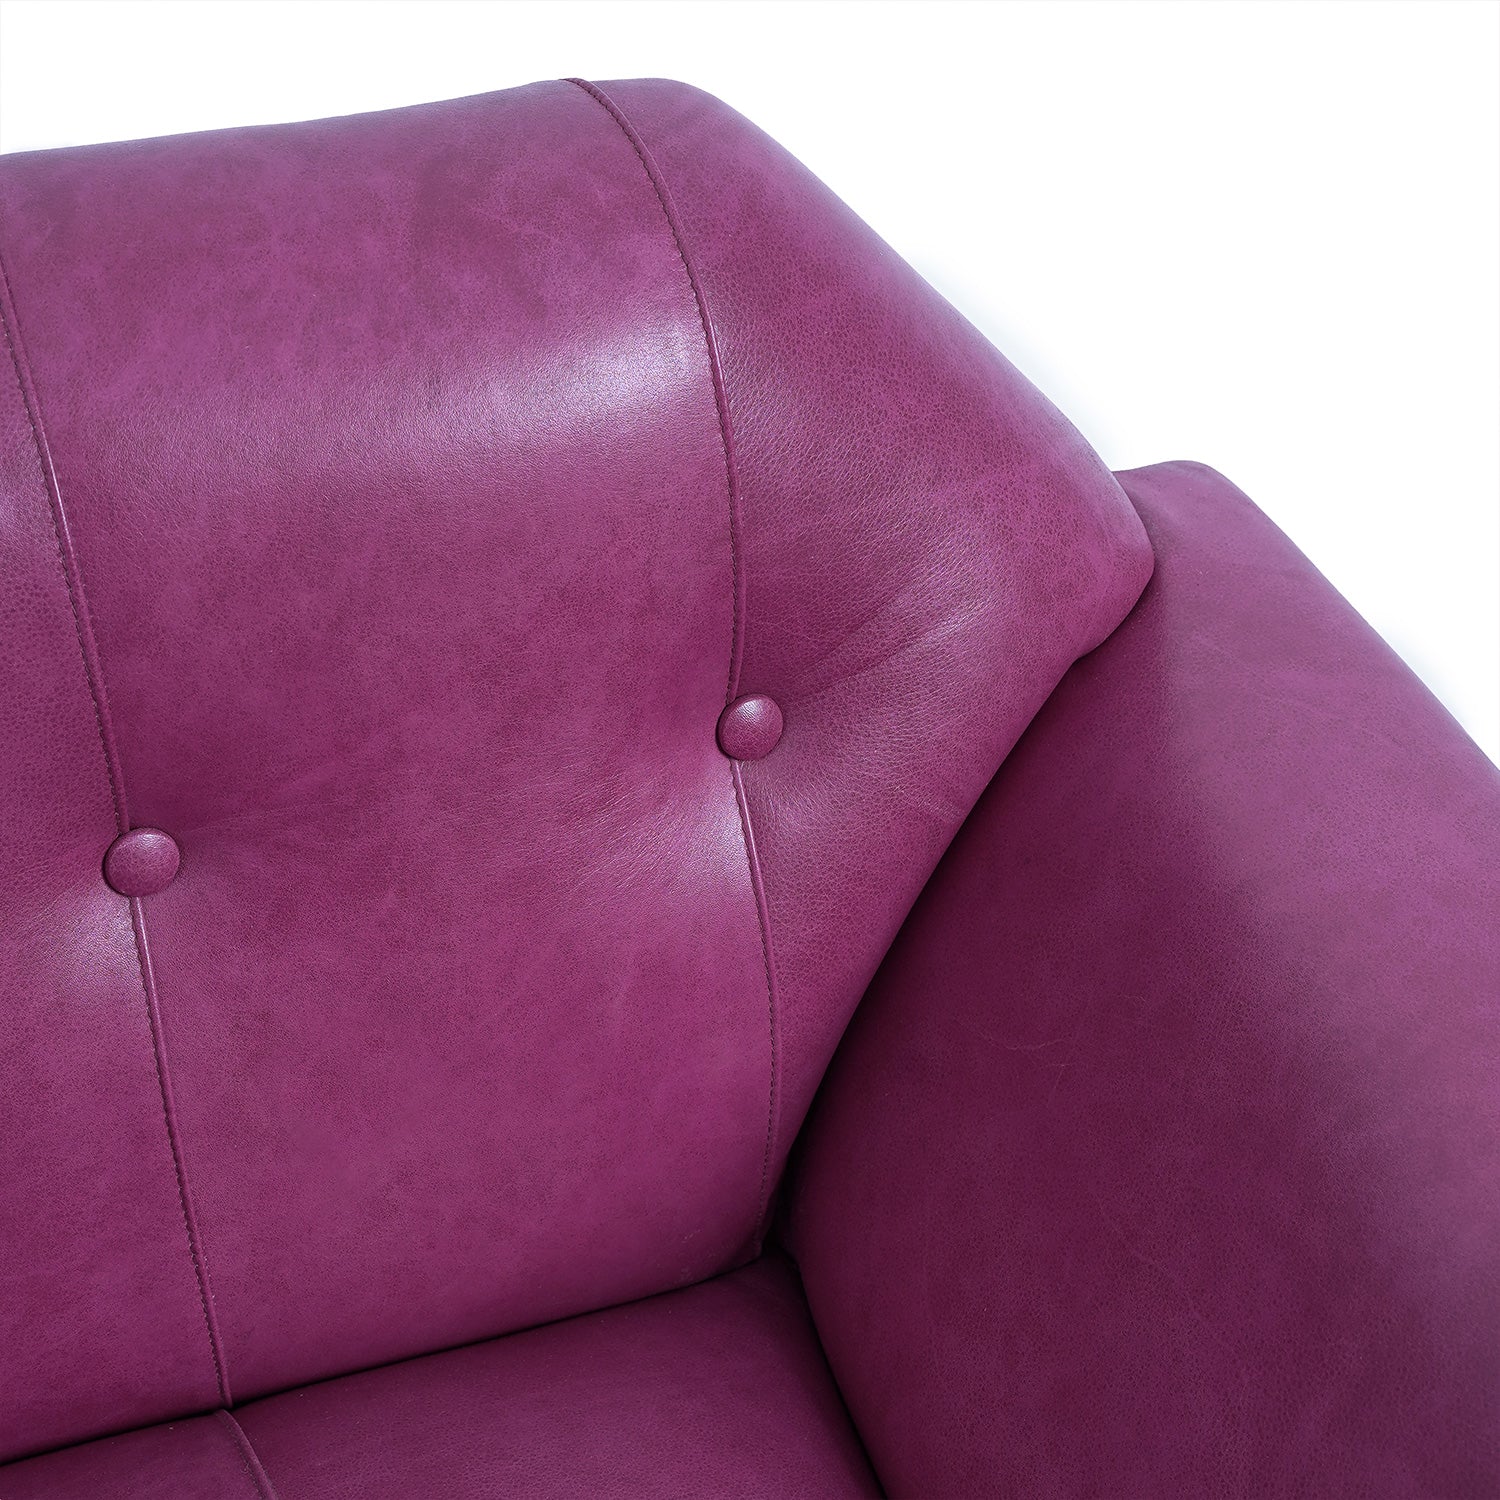 Leatham Ara Antigo Leather Chair Garnet Front Close Up